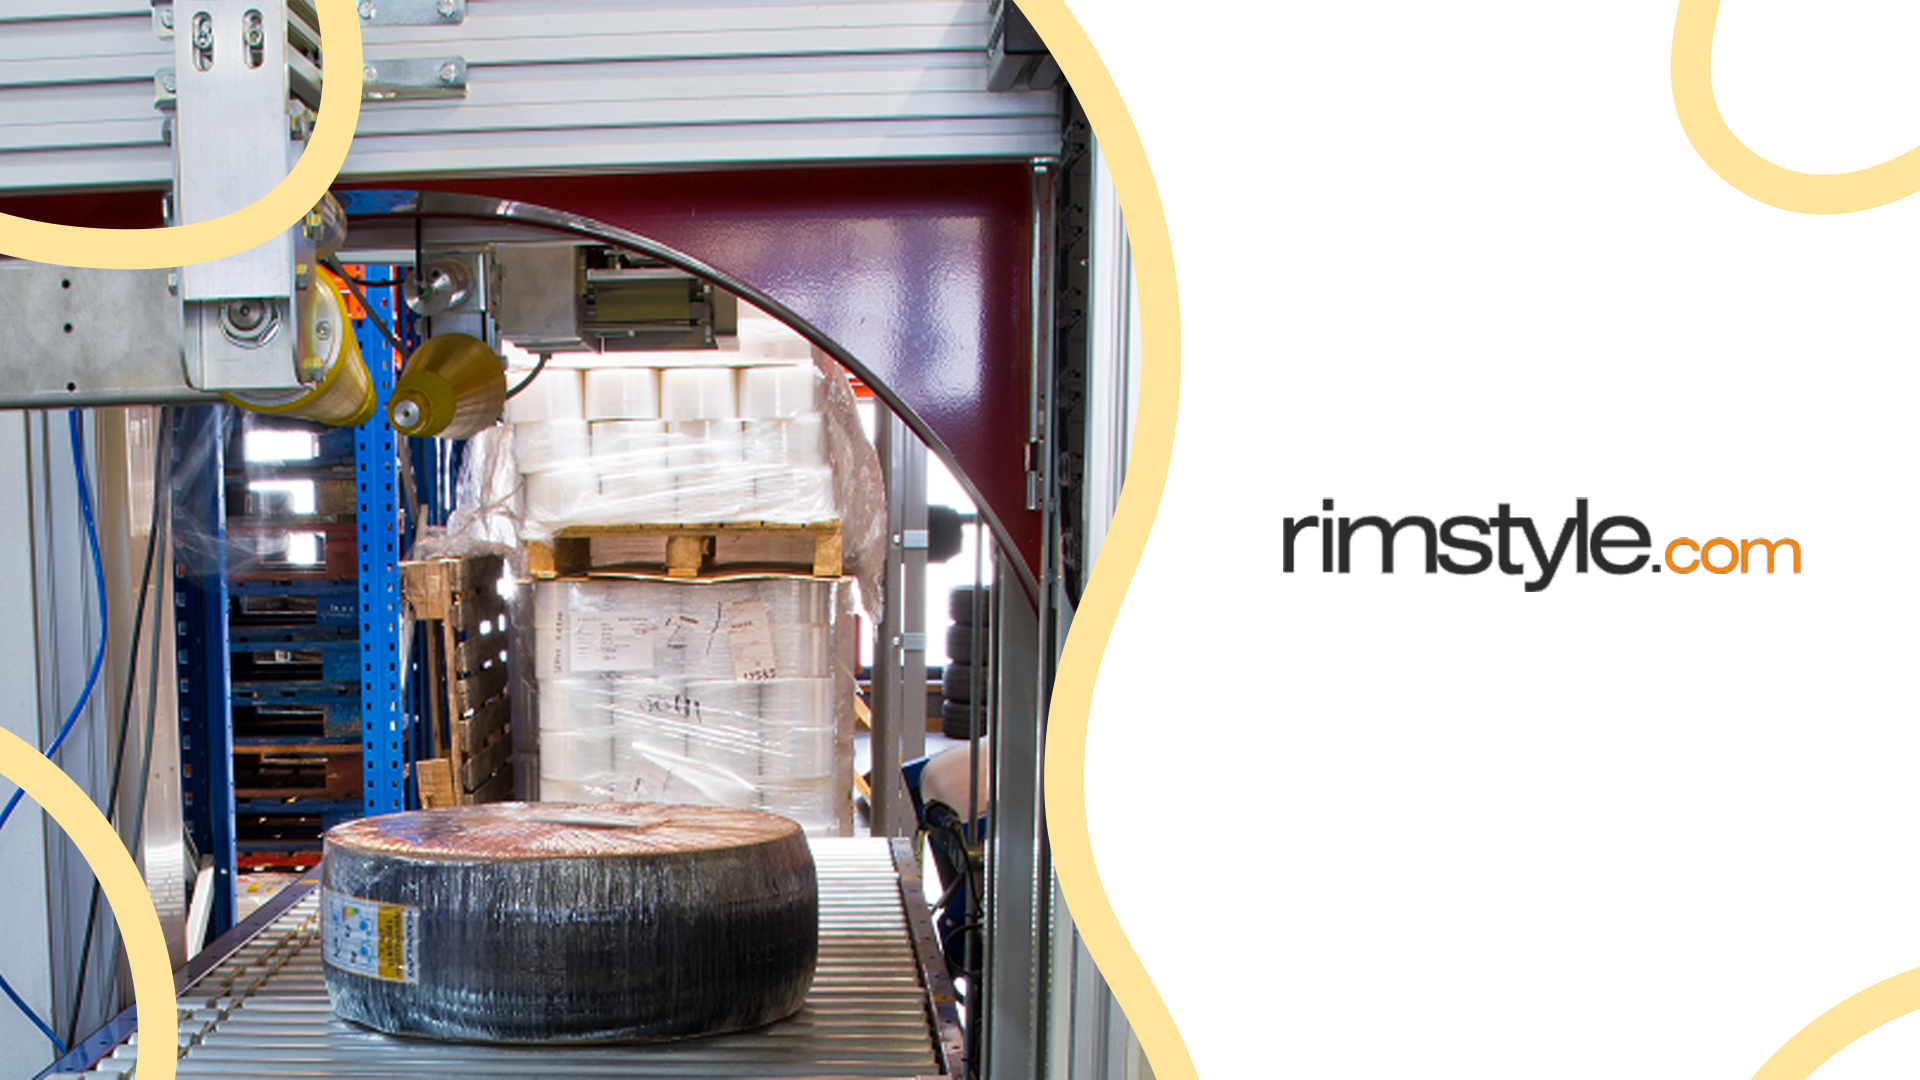 Wrapped tyre on conveyor belt alongside Rimstyle logo